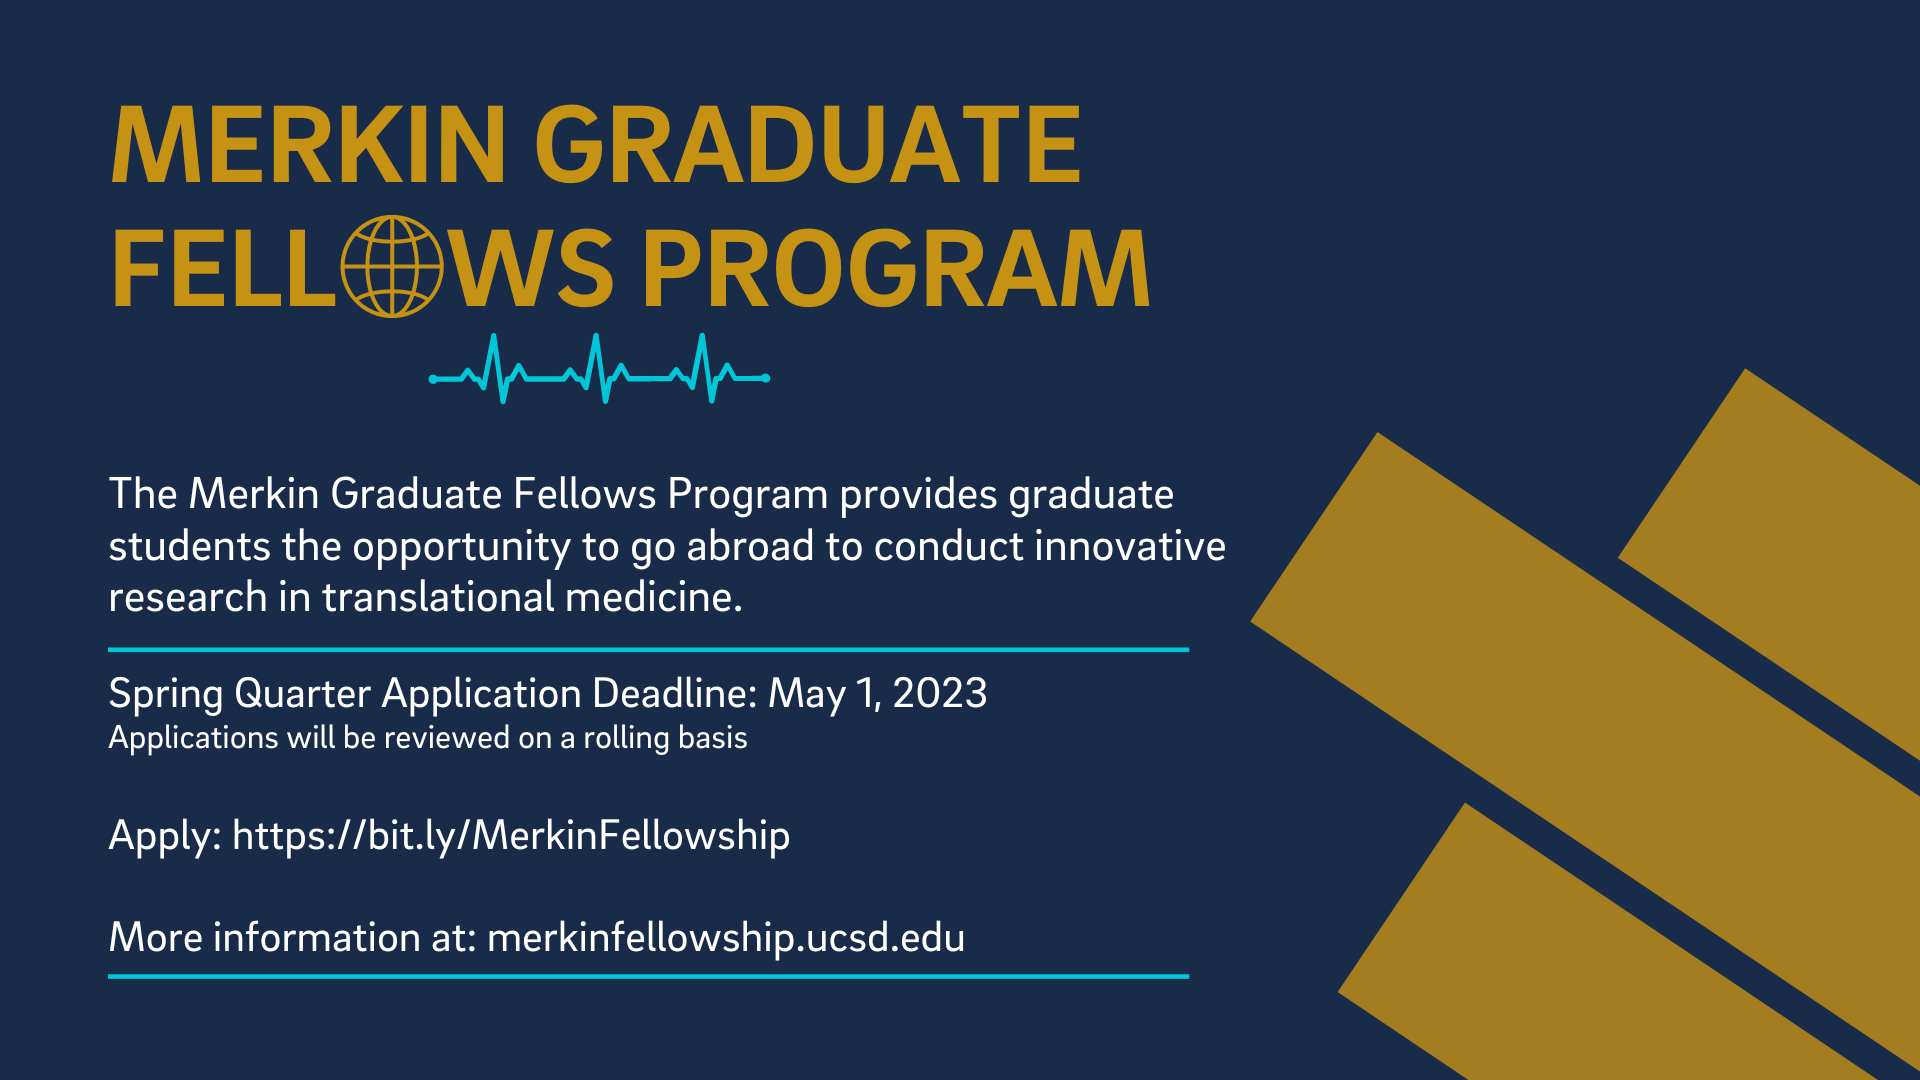 Merkin Grad Fellows Prgrm graphic